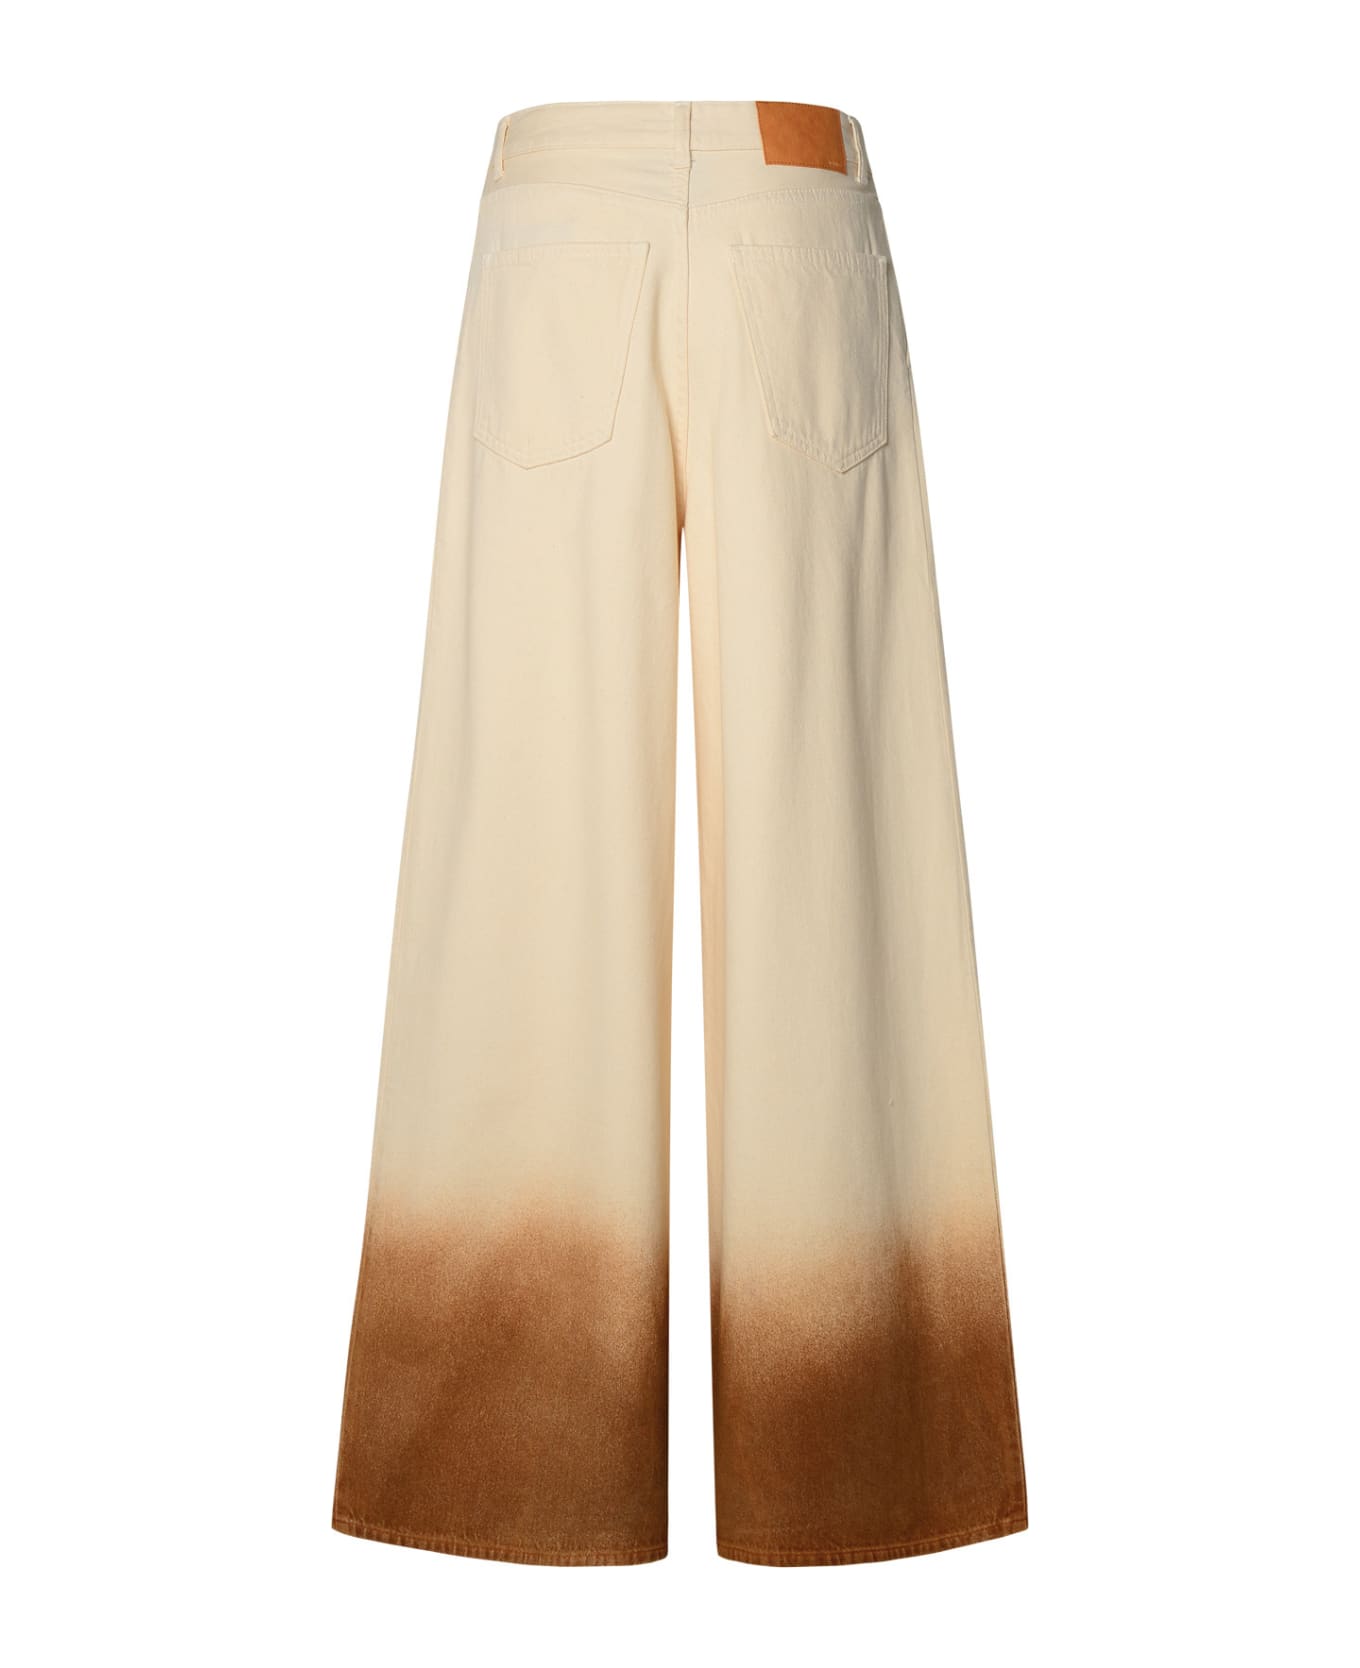 Alanui Cream Cotton Pants - Bianco/marrone